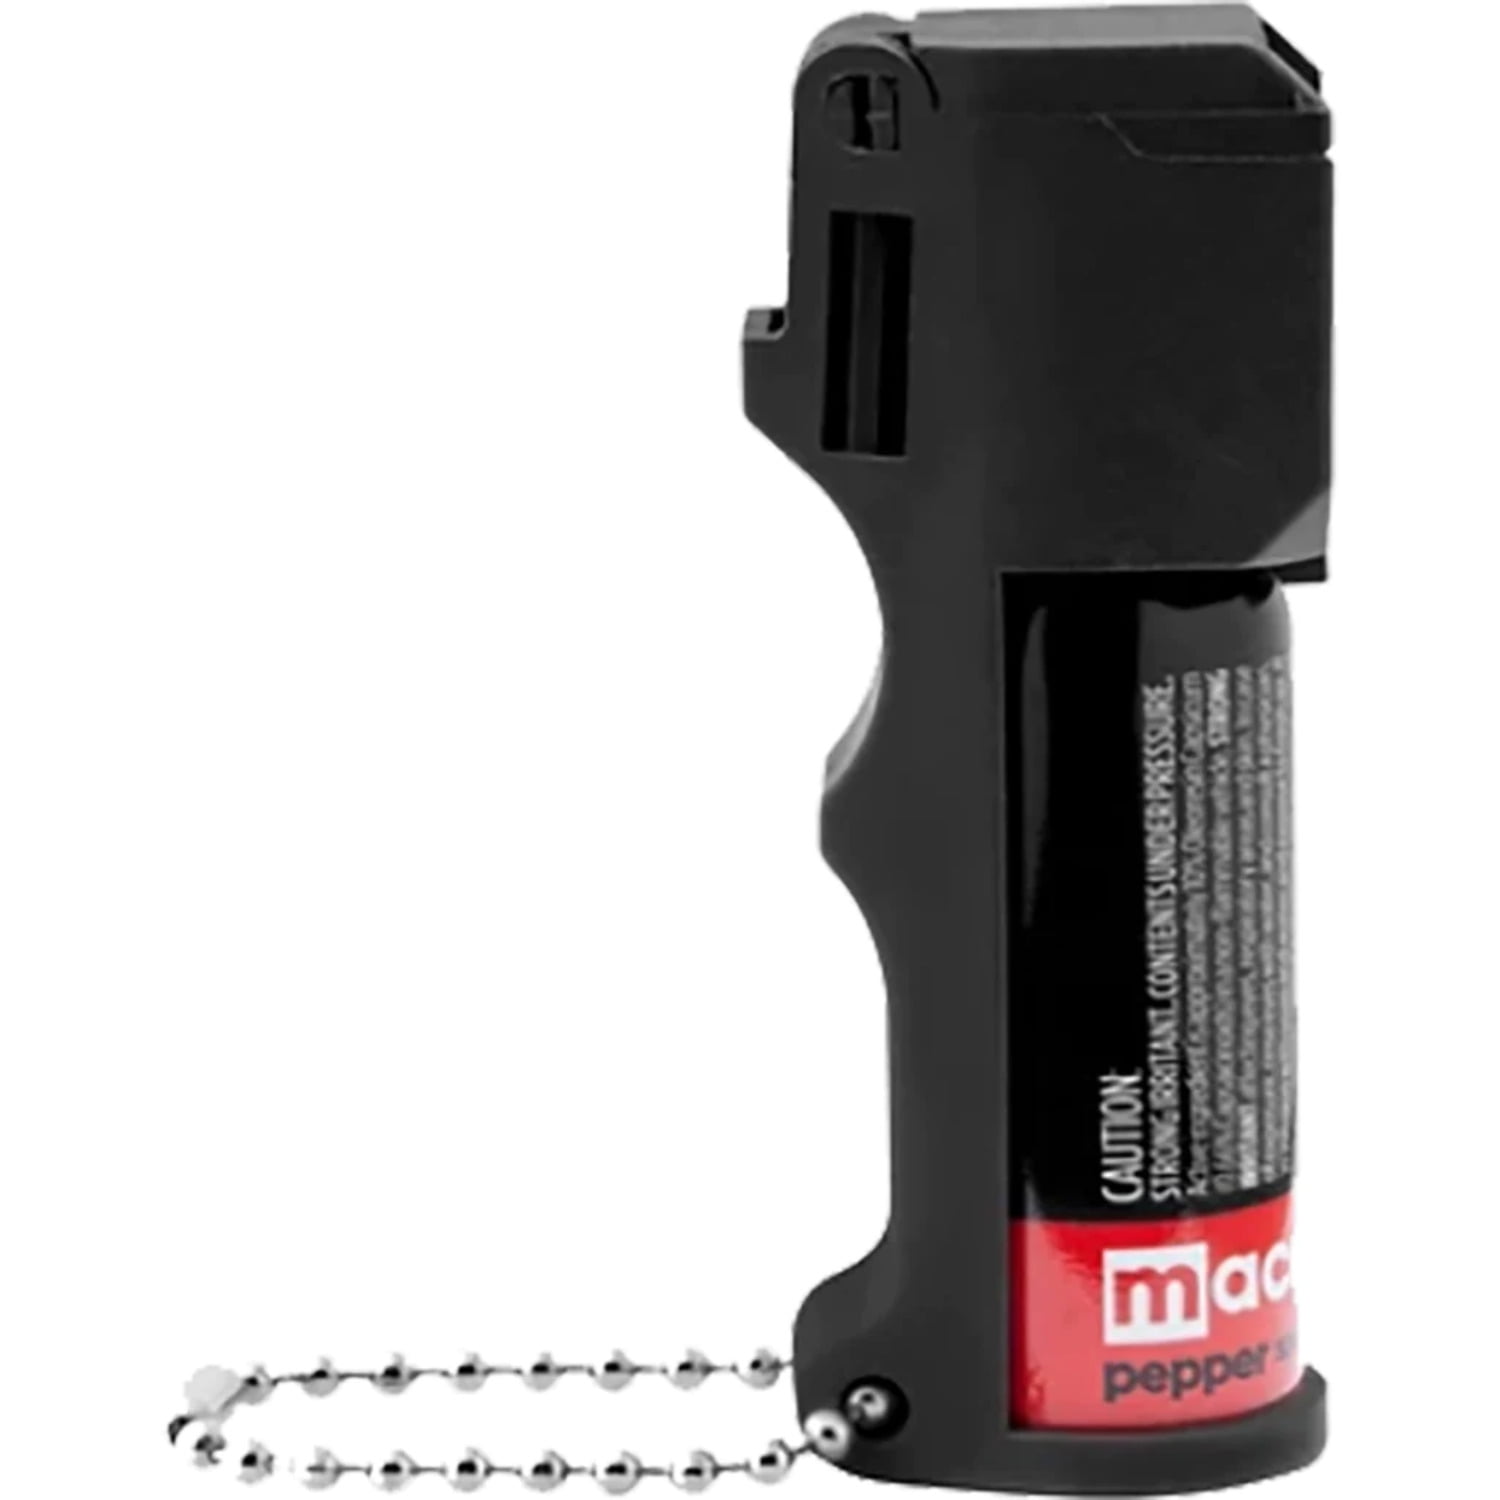 with Max - Marking UV Pepper Spray Mace Strength Pocket Black Brand Dye Model